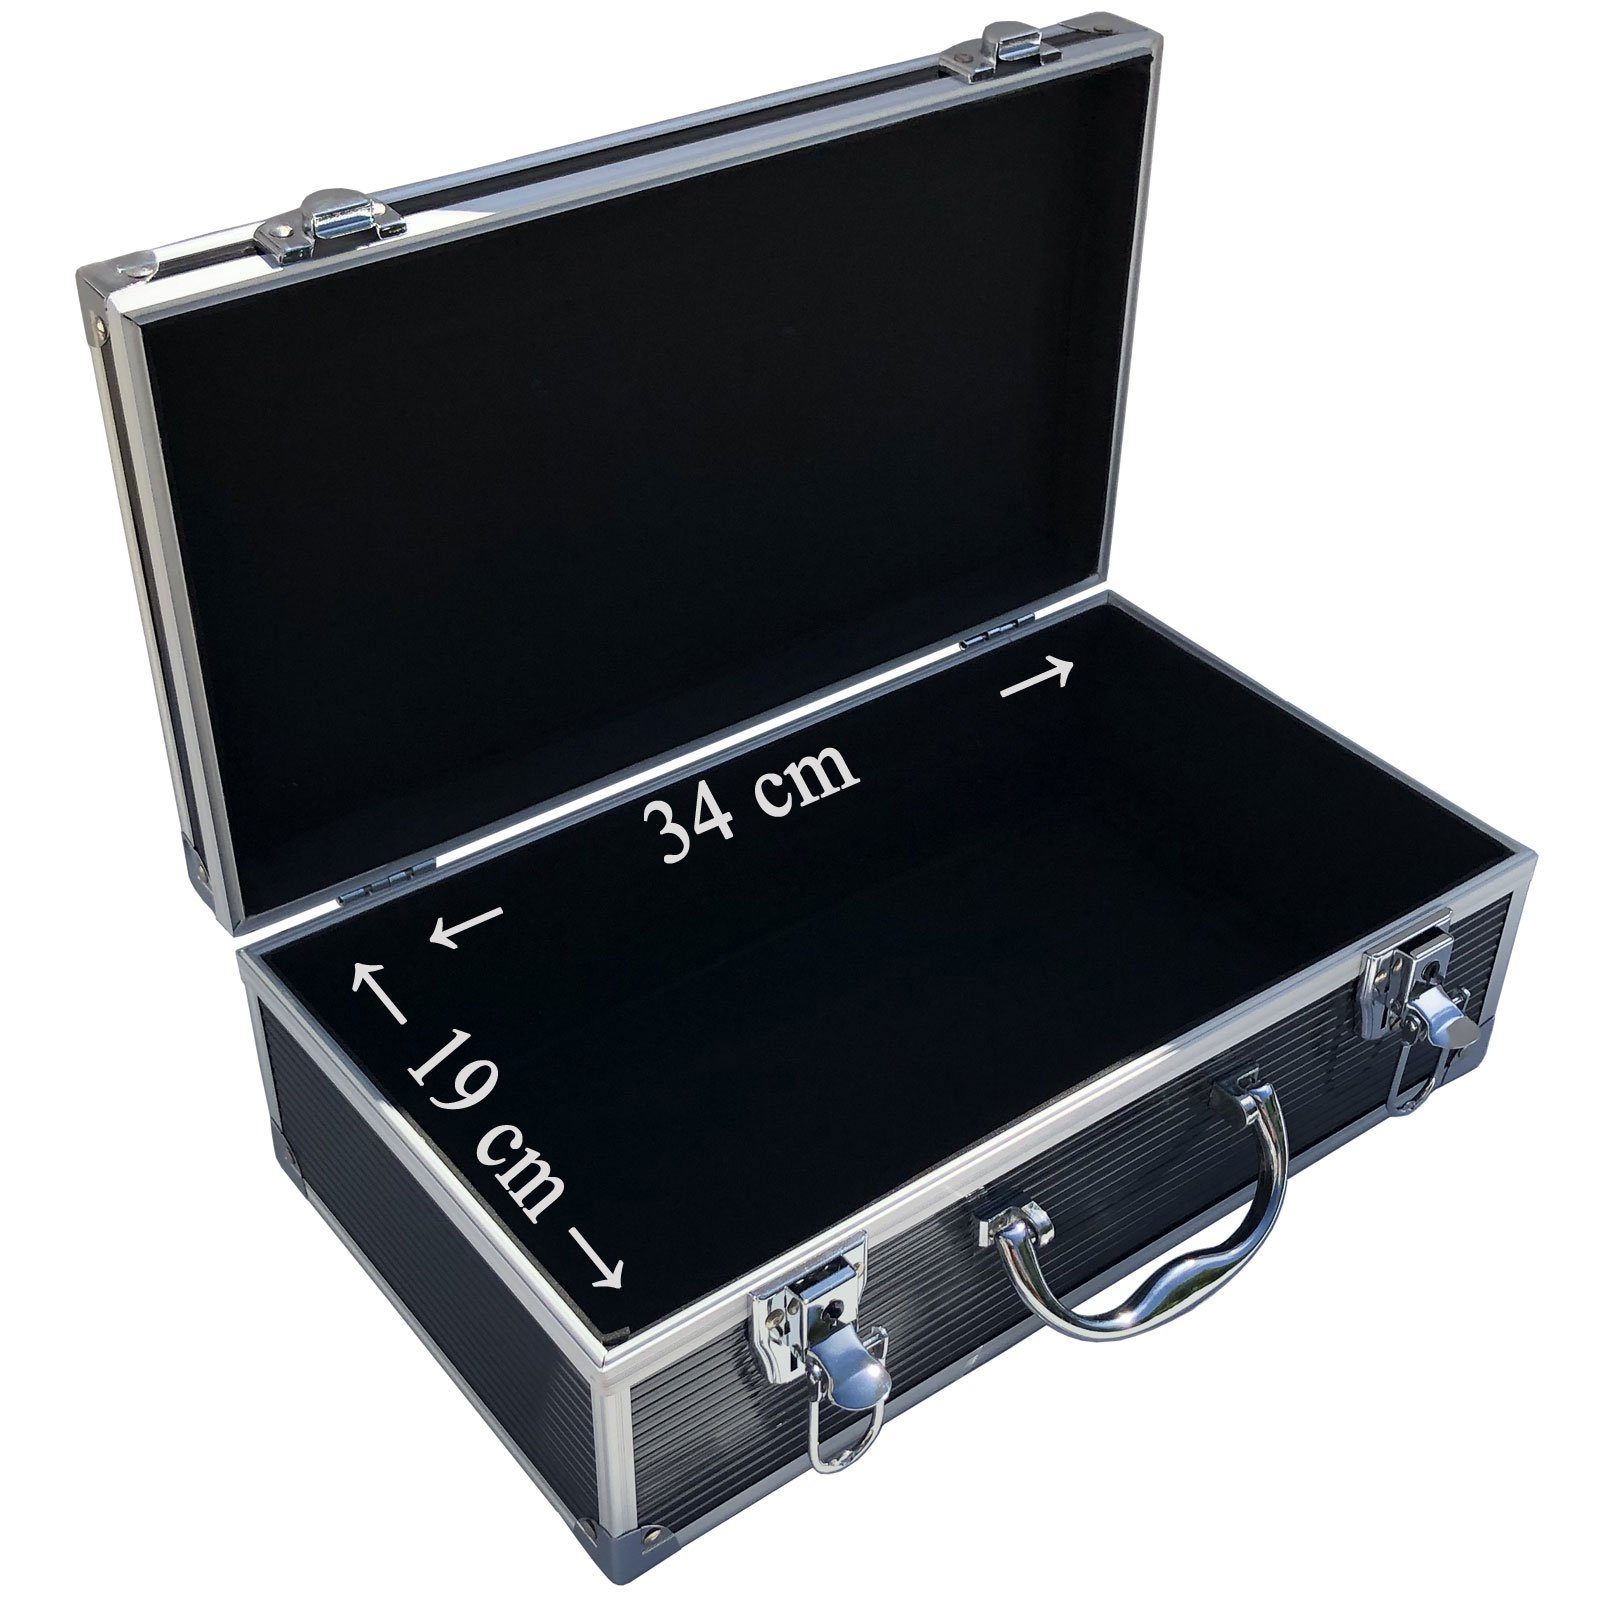 Leer x Schwarz 353 Aluminium Tools (LxBxH) Koffer ECI Werkzeugkoffer 202